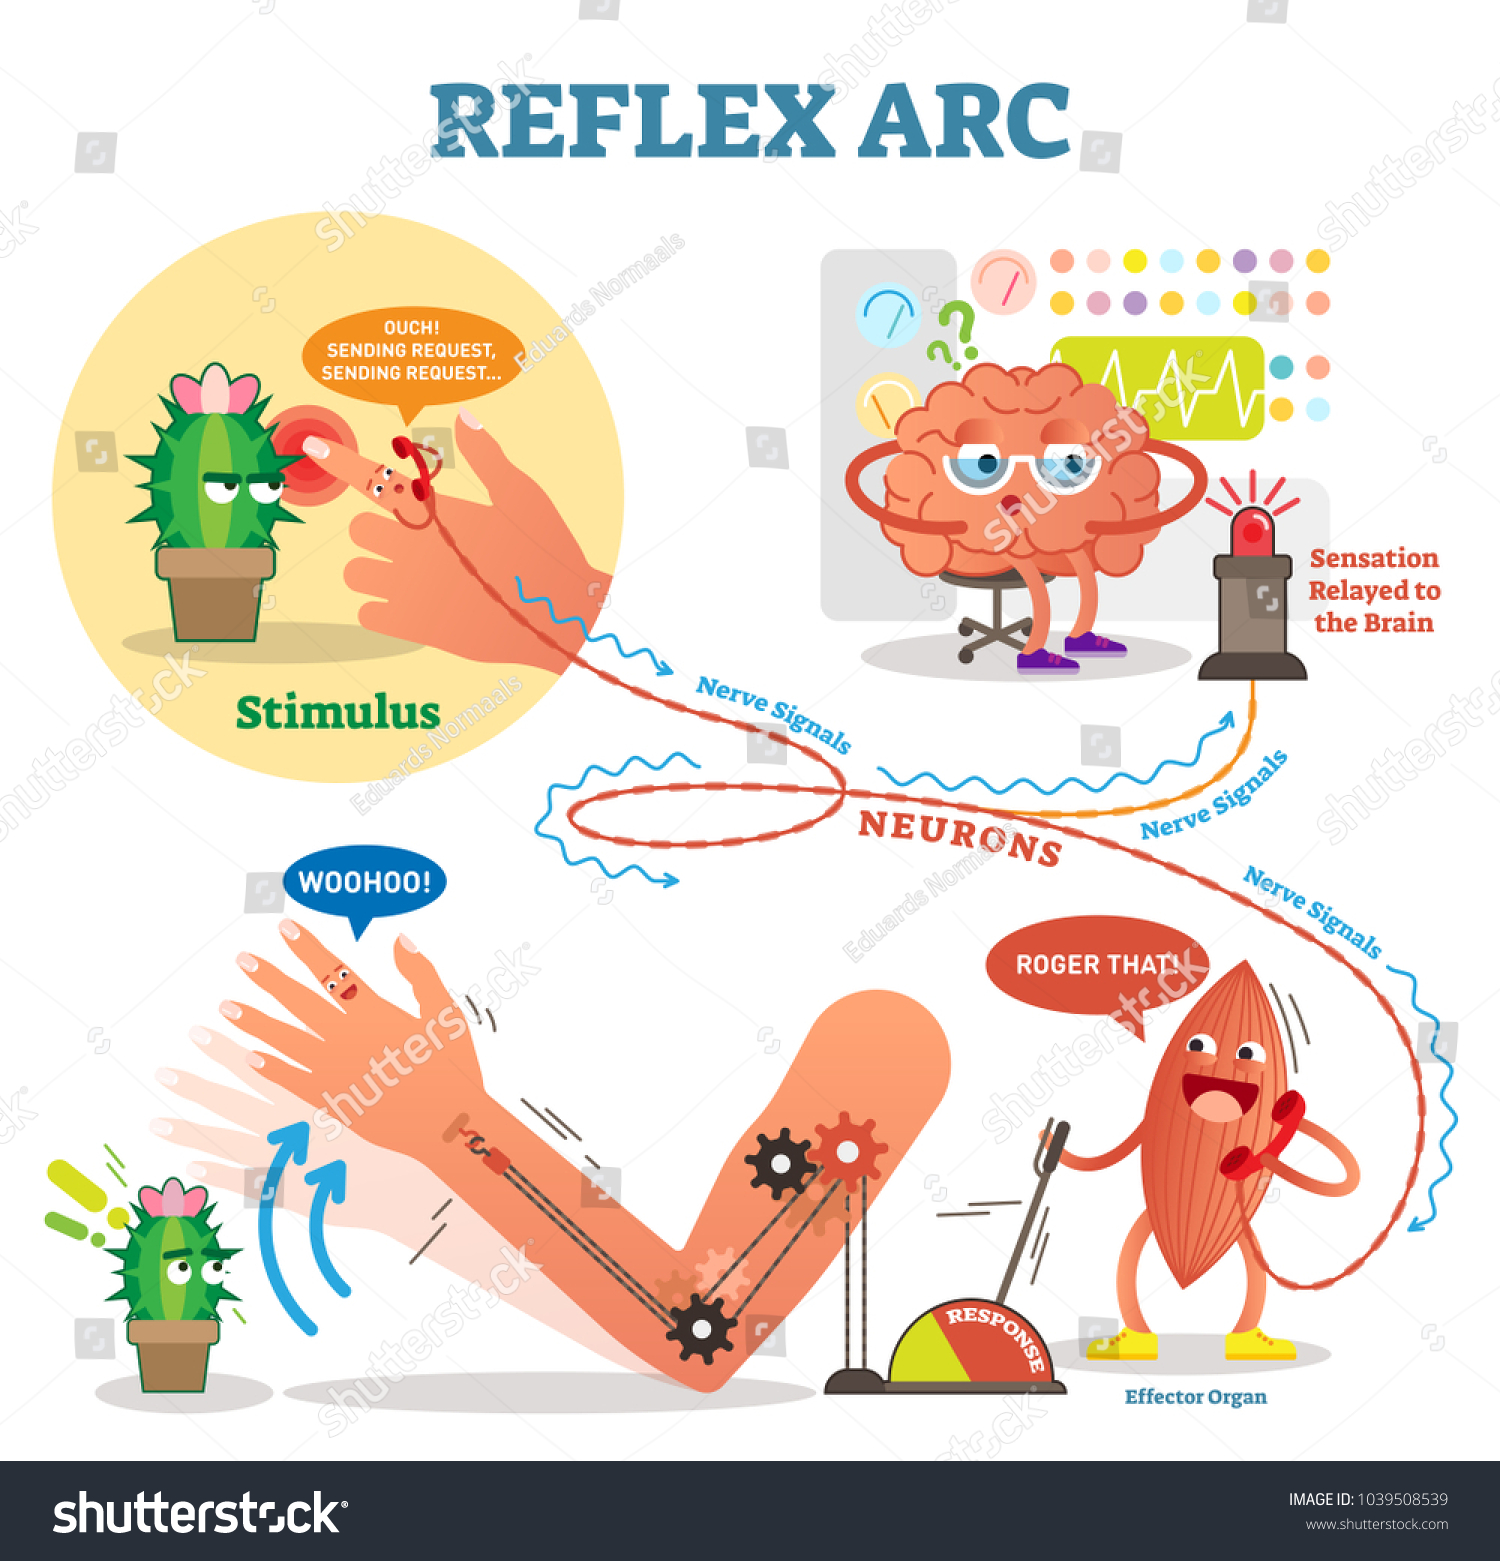 Spinal Reflex Arc Scheme Vector Illustration Royalty Free Stock Vector 1039508539 8018